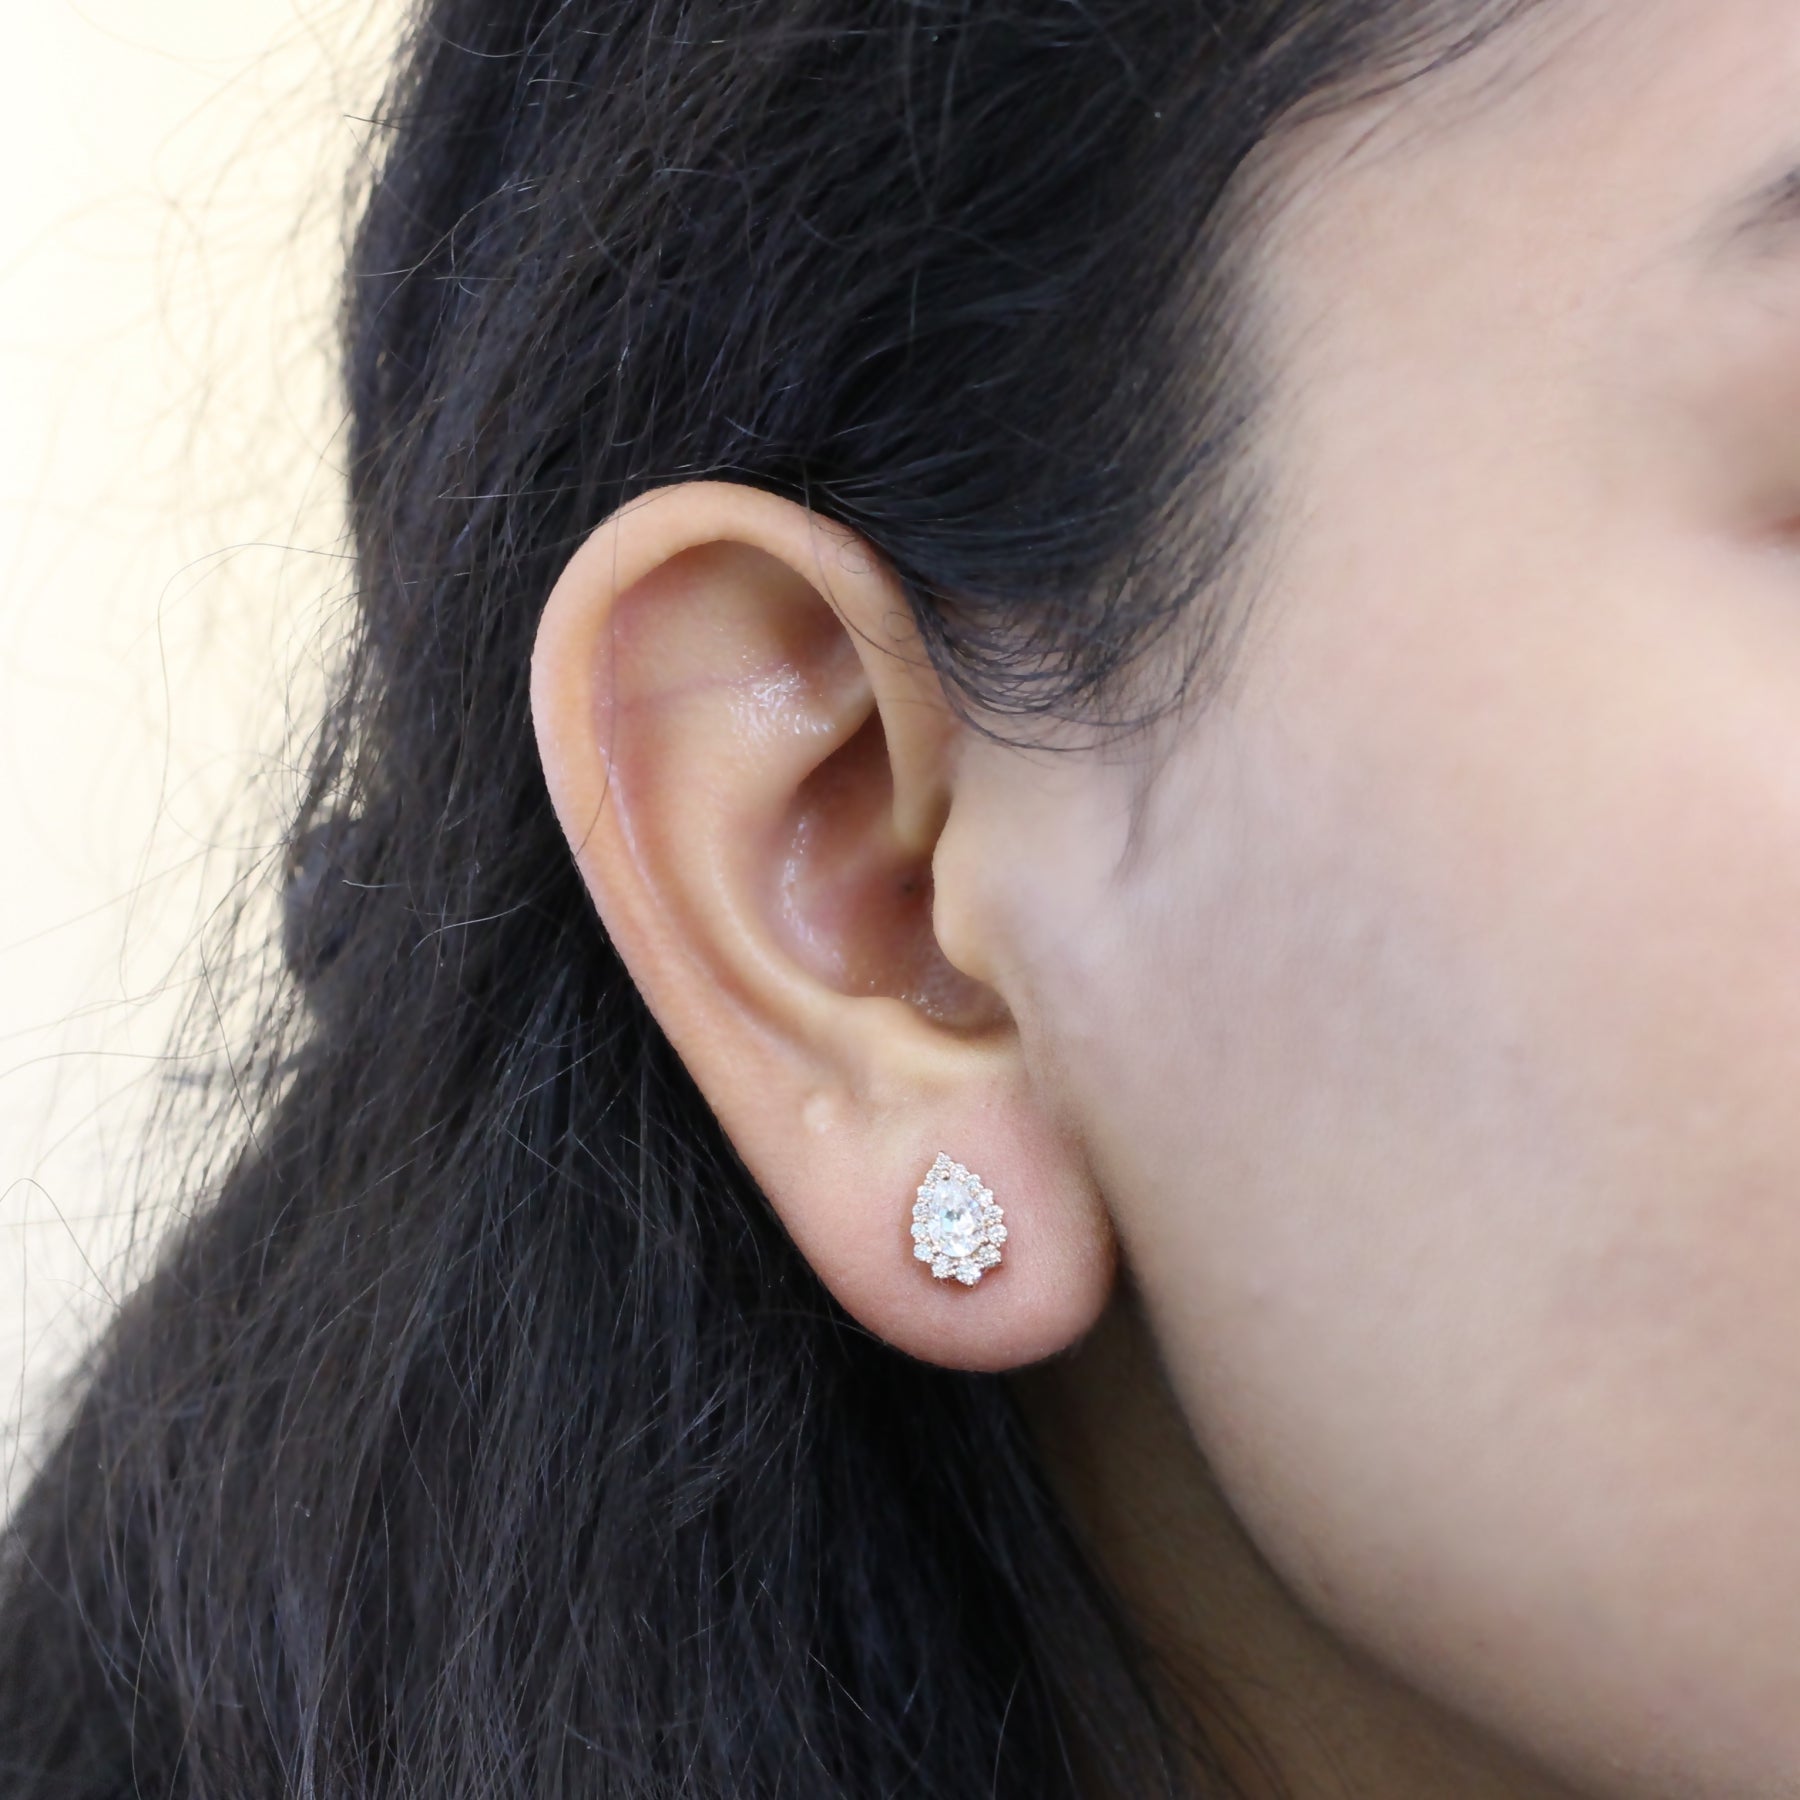 Tiara halo diamond pear moissanite earrings rose gold diamond studs la more design jewelry